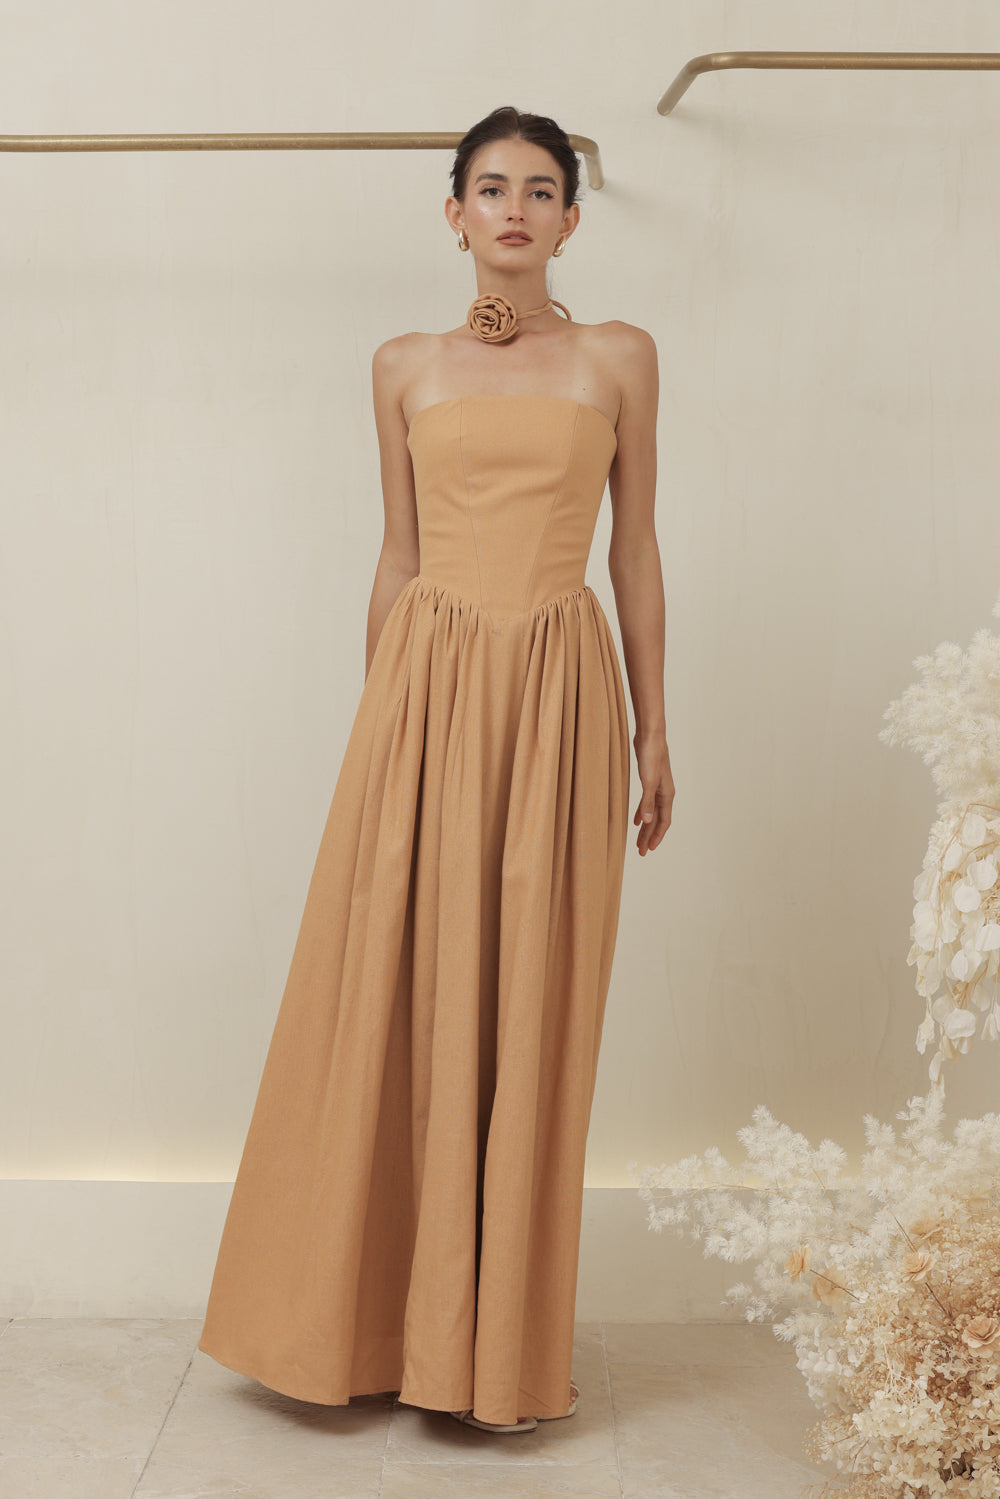 CAPUCINE DRESS Strapless Baroque Style Waist Maxi Dress with Floral Neckpiece (Camel Linen)